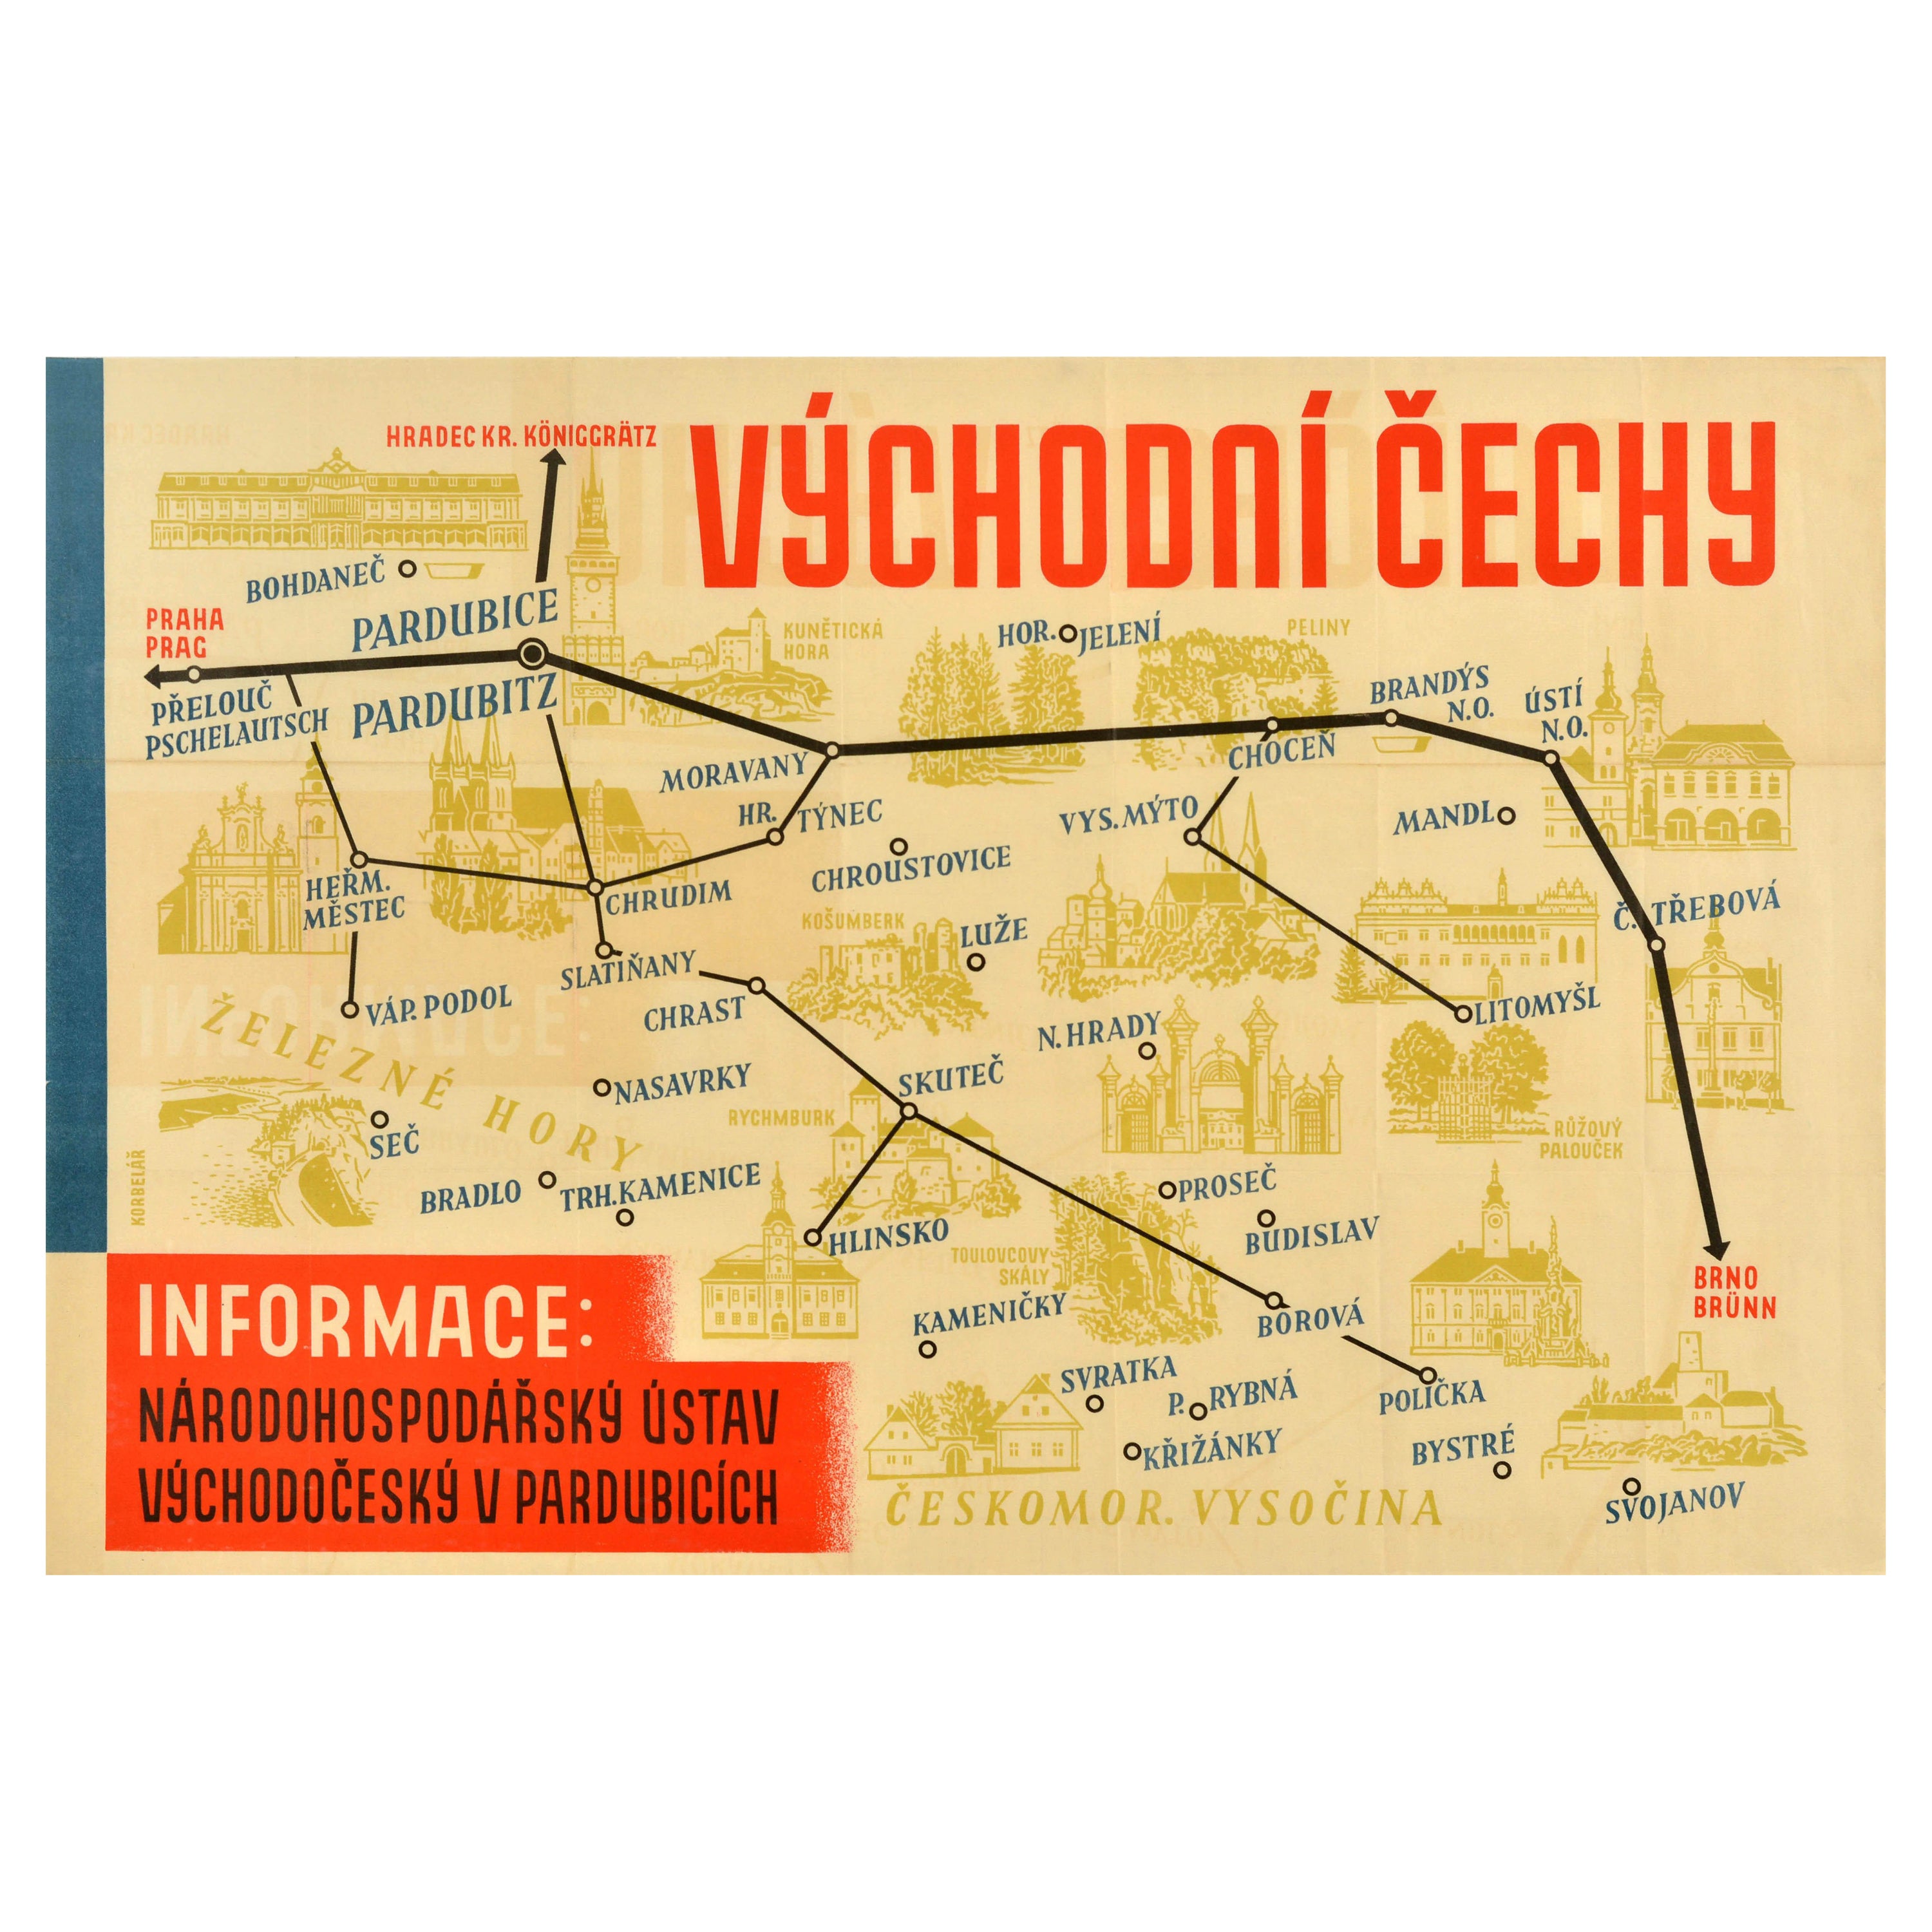 Original Vintage Travel Poster Eastern Bohemia Vychodni Cechy Map Czechoslovakia